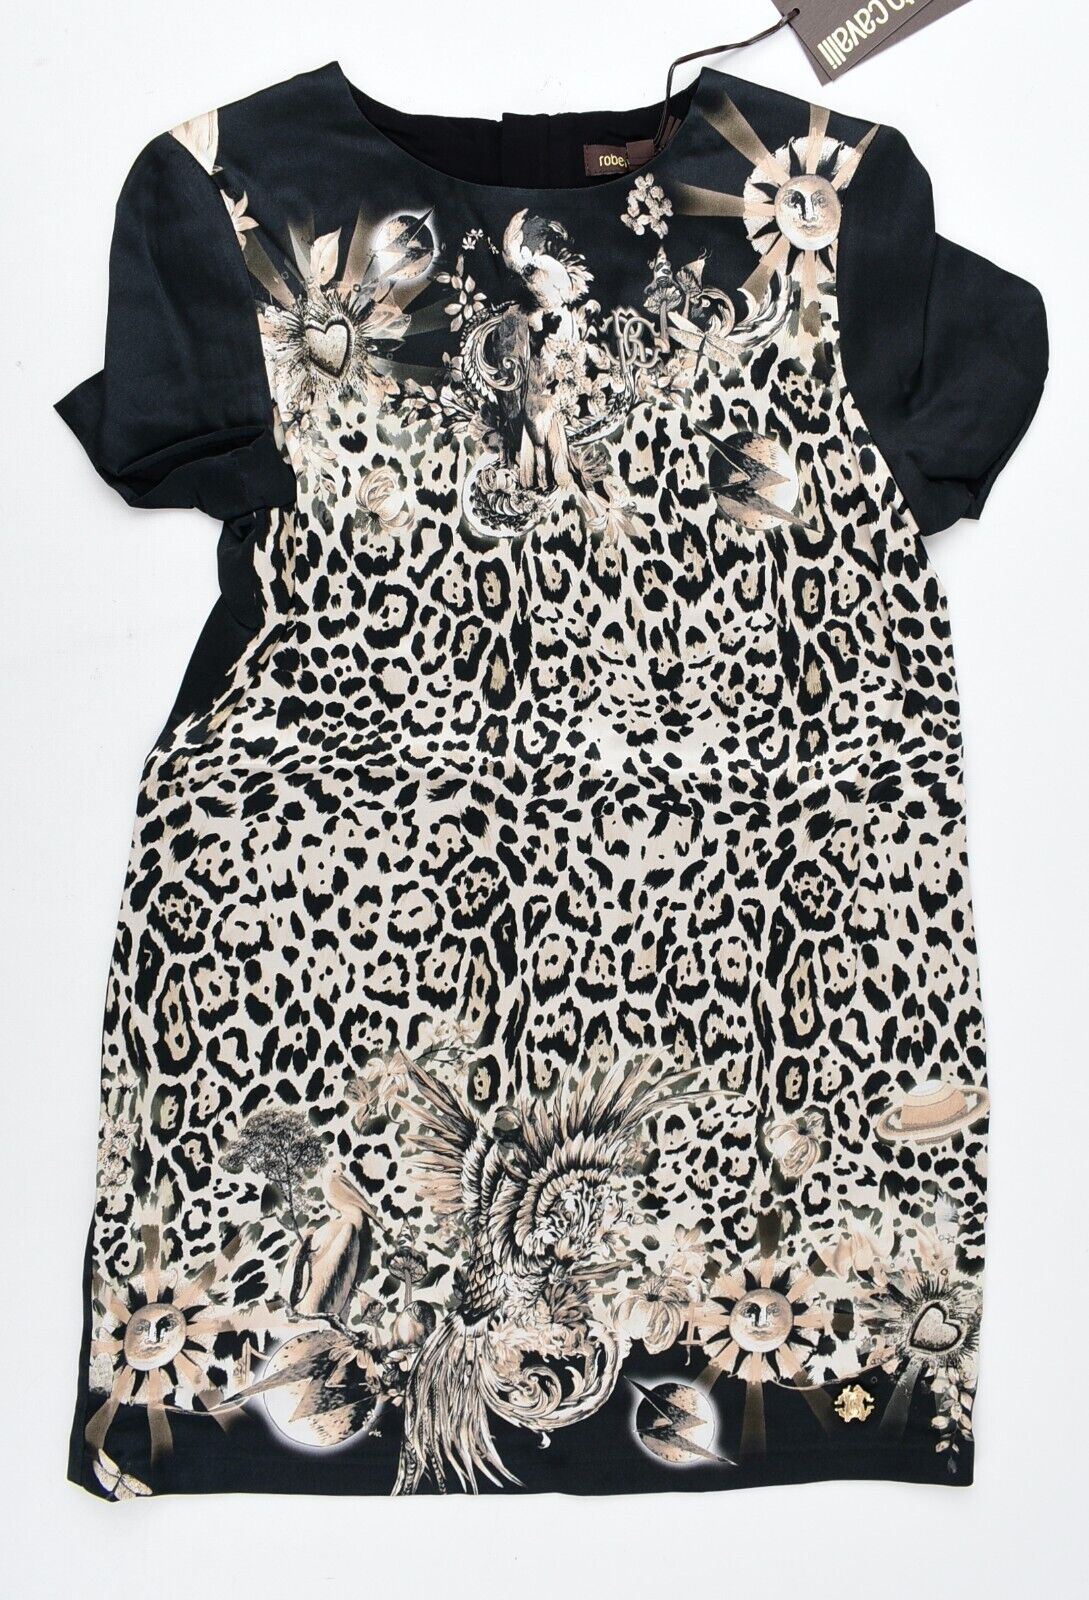 ROBERTO CAVALLI Girls Leopard Print 100% SILK Dress, Black/Brown, size 6 years